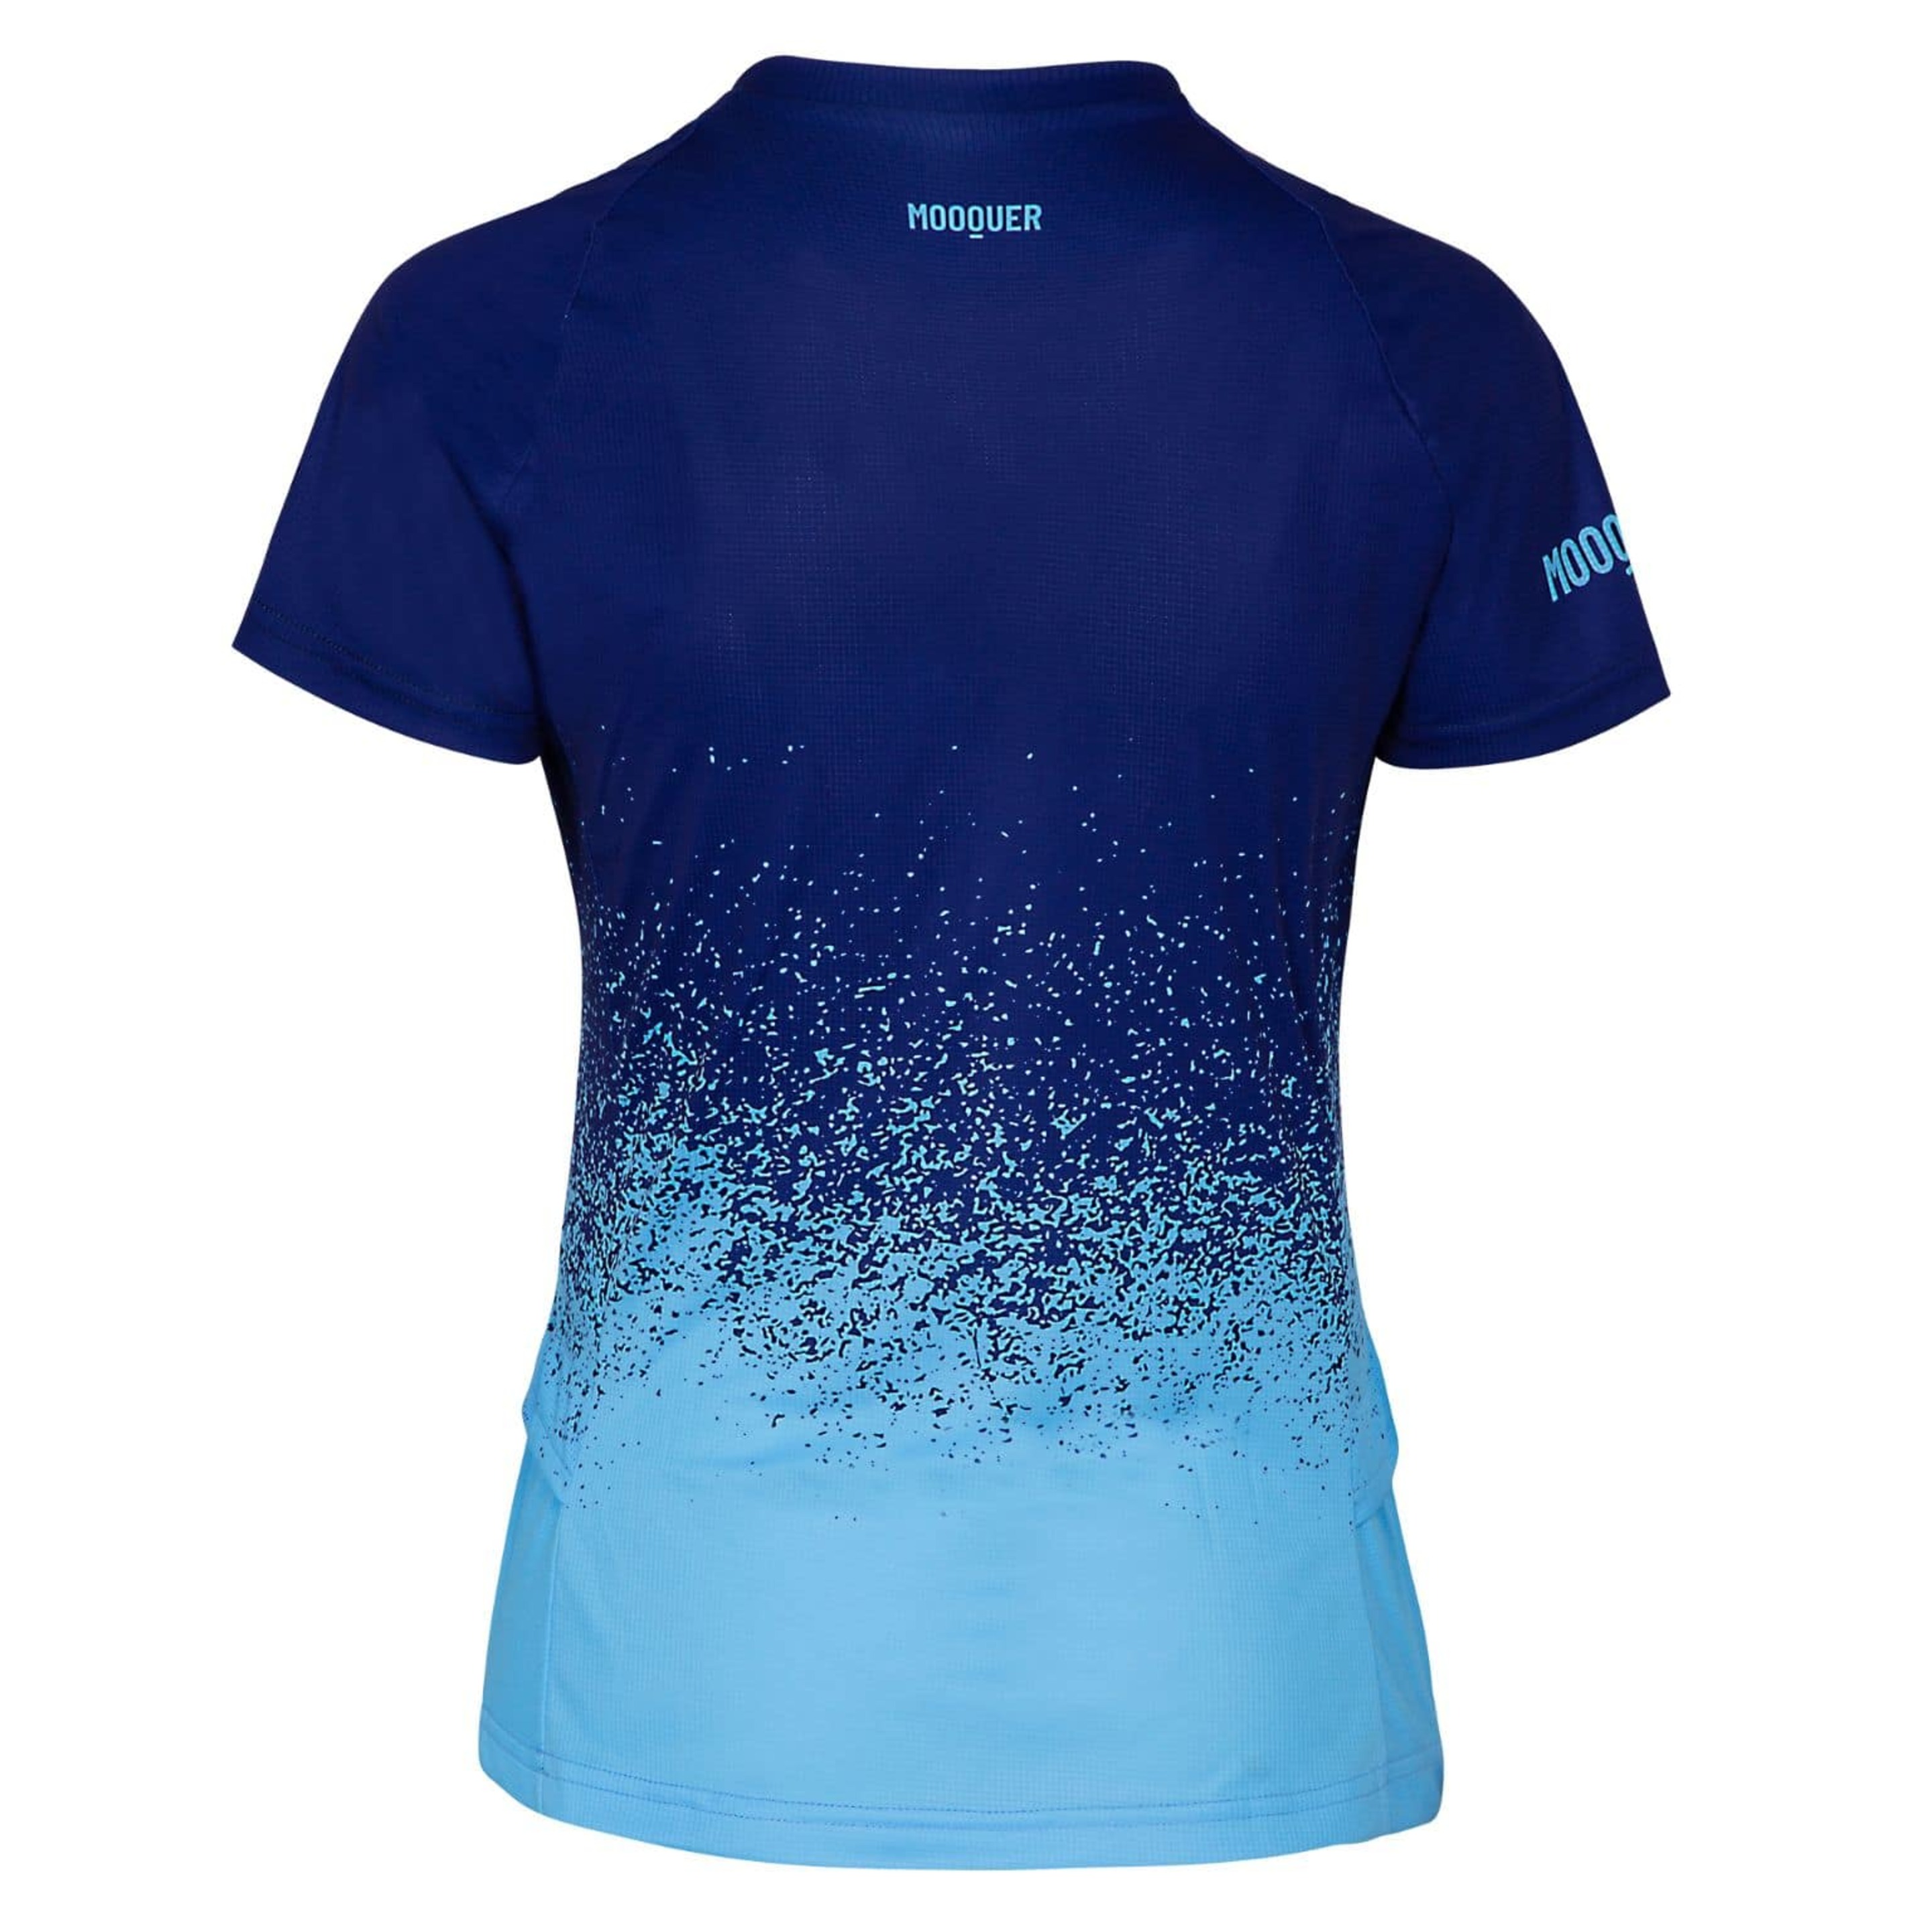 Camiseta Técnica De Corrida E Trilha Running Trail Run Mooquer Navy Da Supra - Azul | Sport Zone MKP